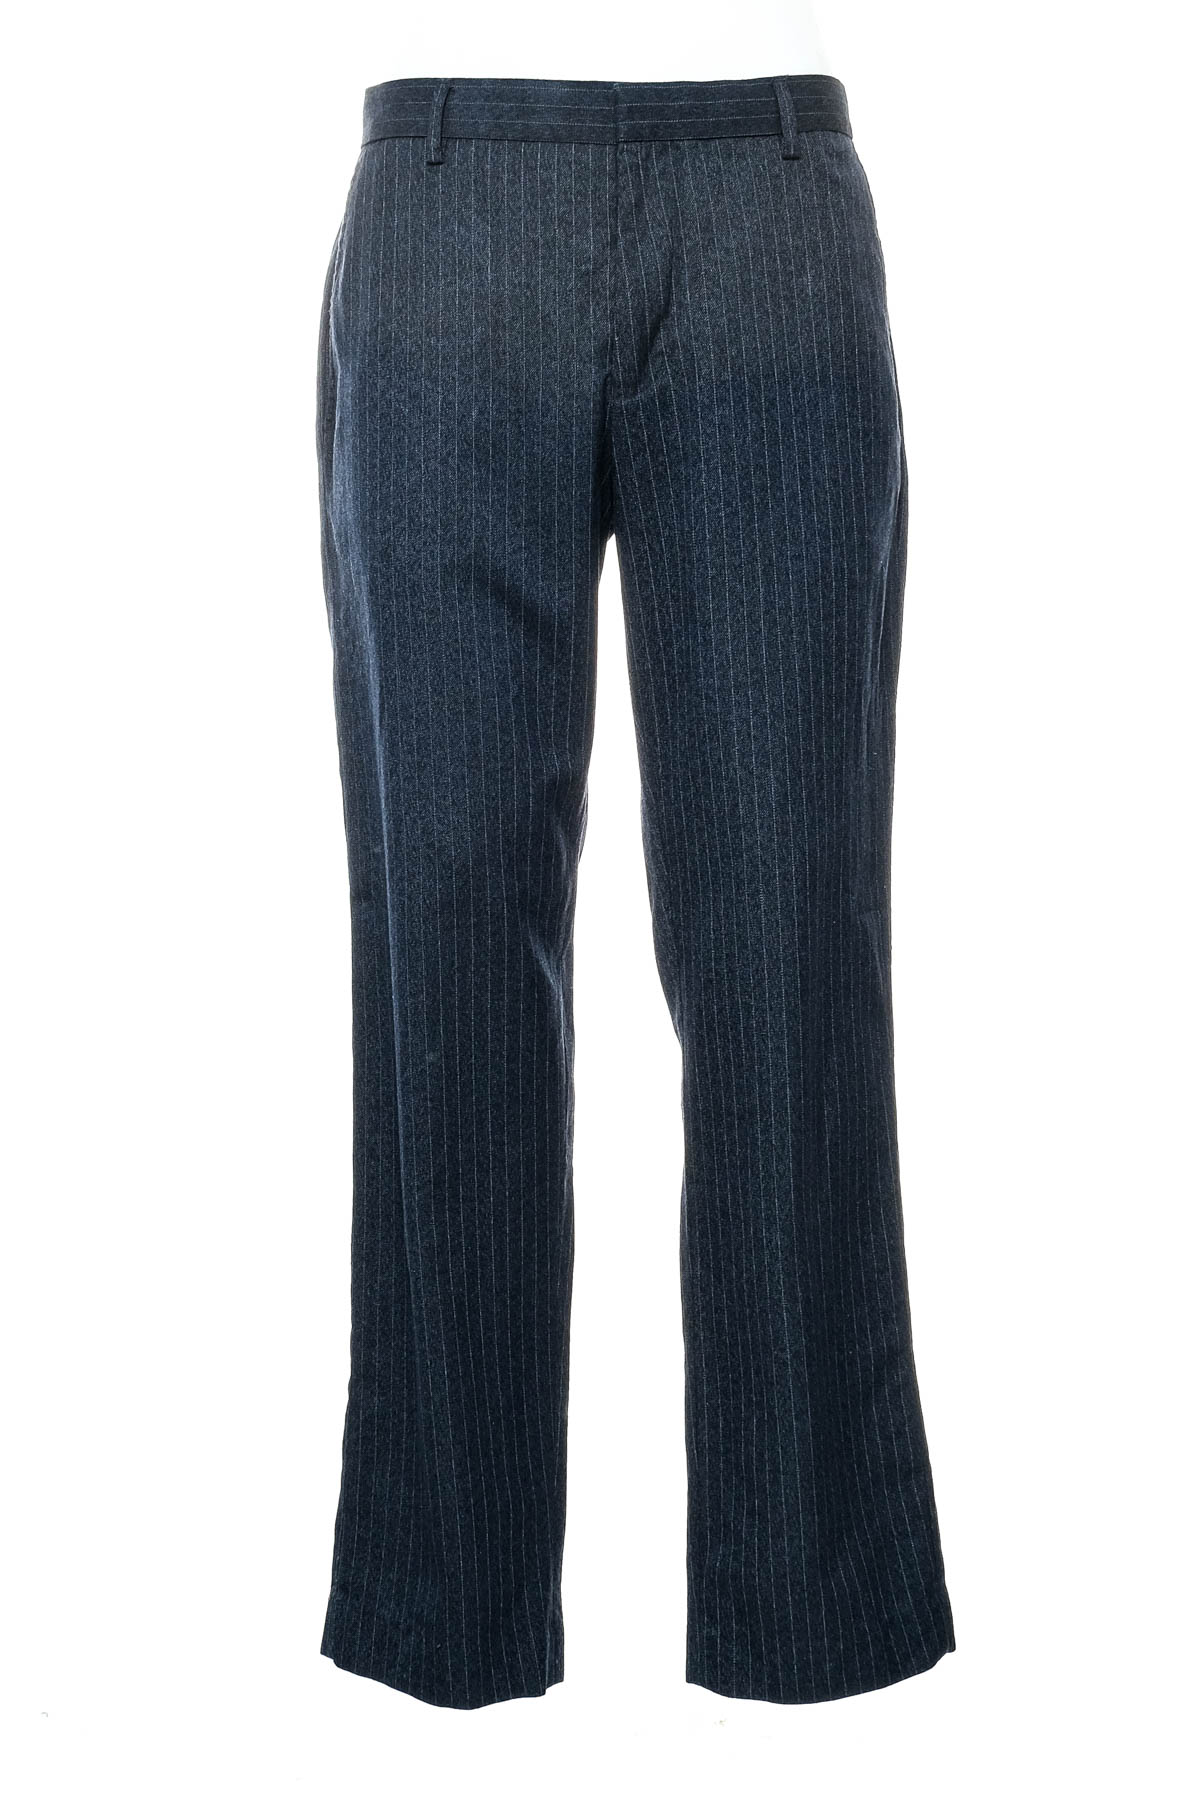 Pantalon pentru bărbați - Burton - 0